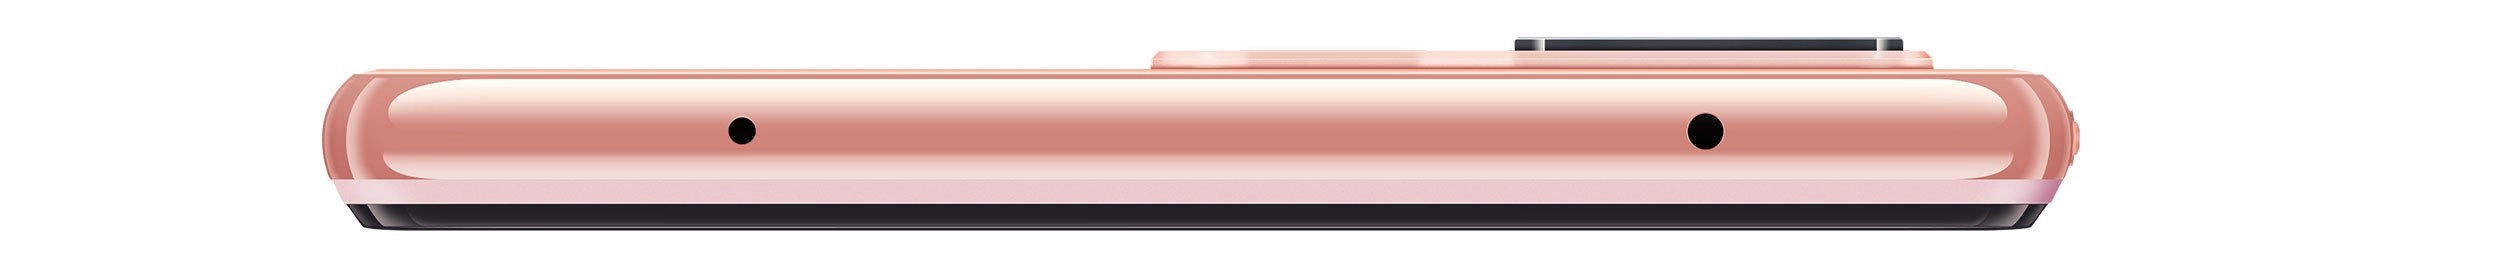 Цена Смартфон Xiaomi Mi 11 Lite 6/128Gb Pink